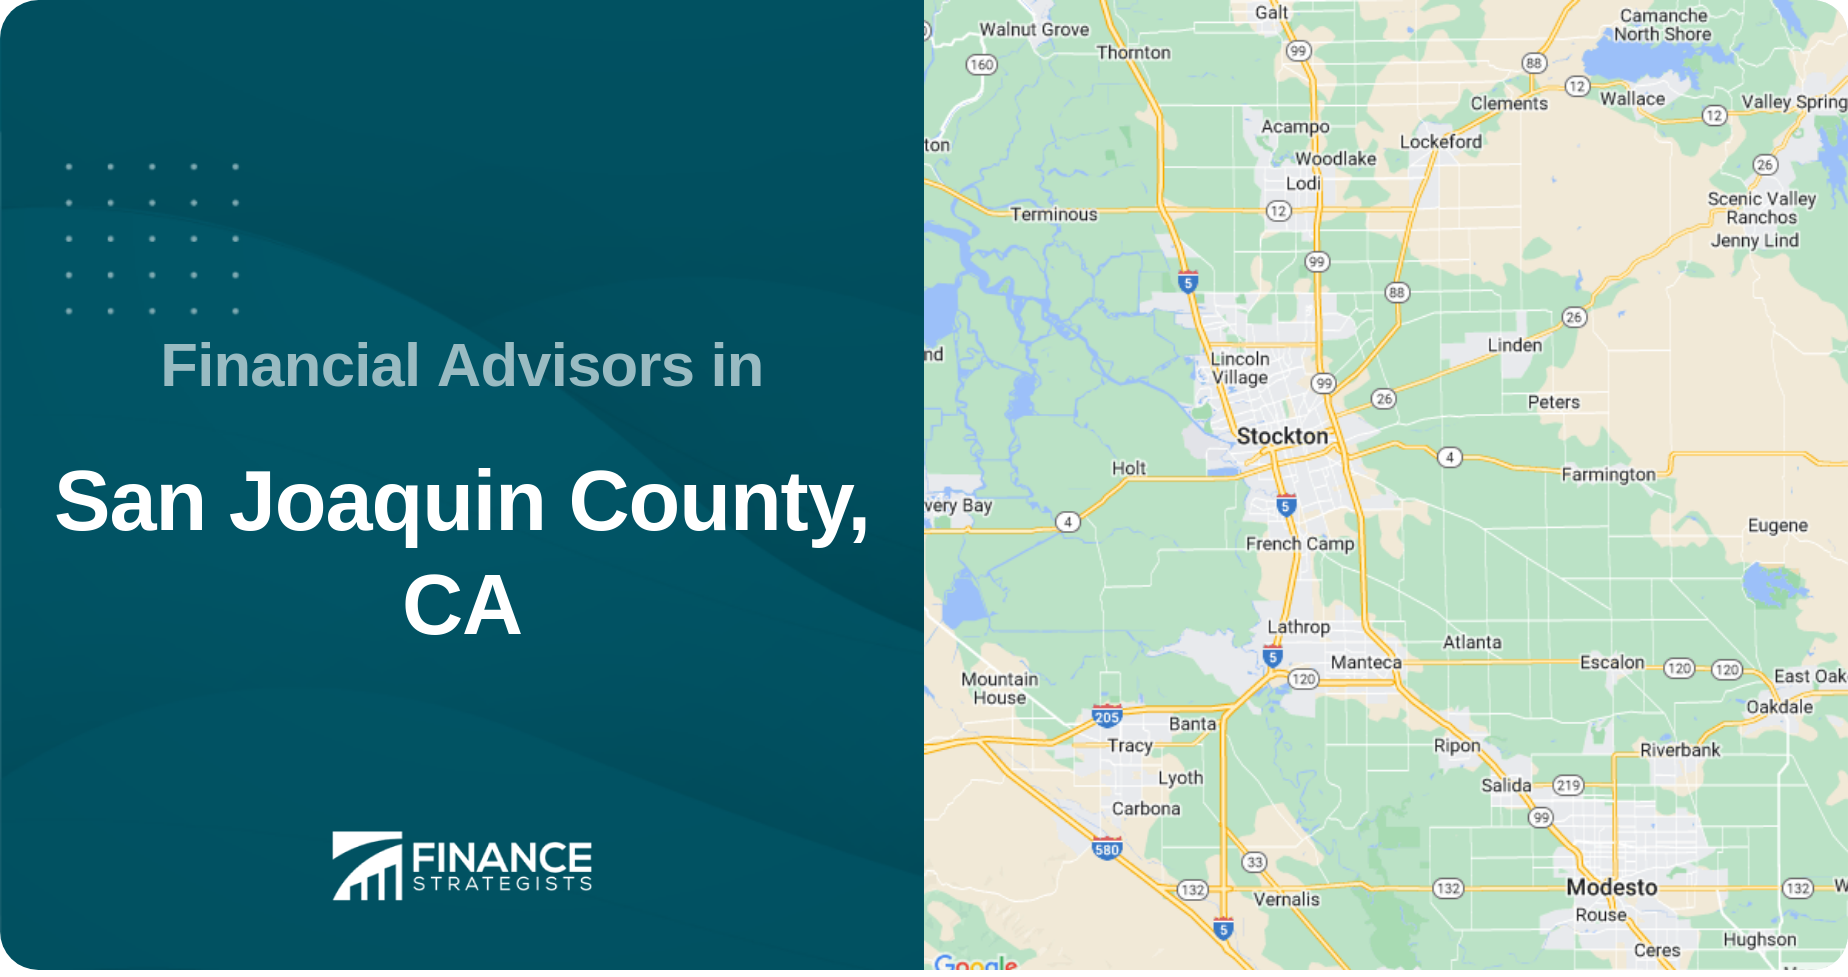 Financial Advisors in San Joaquin County, CA